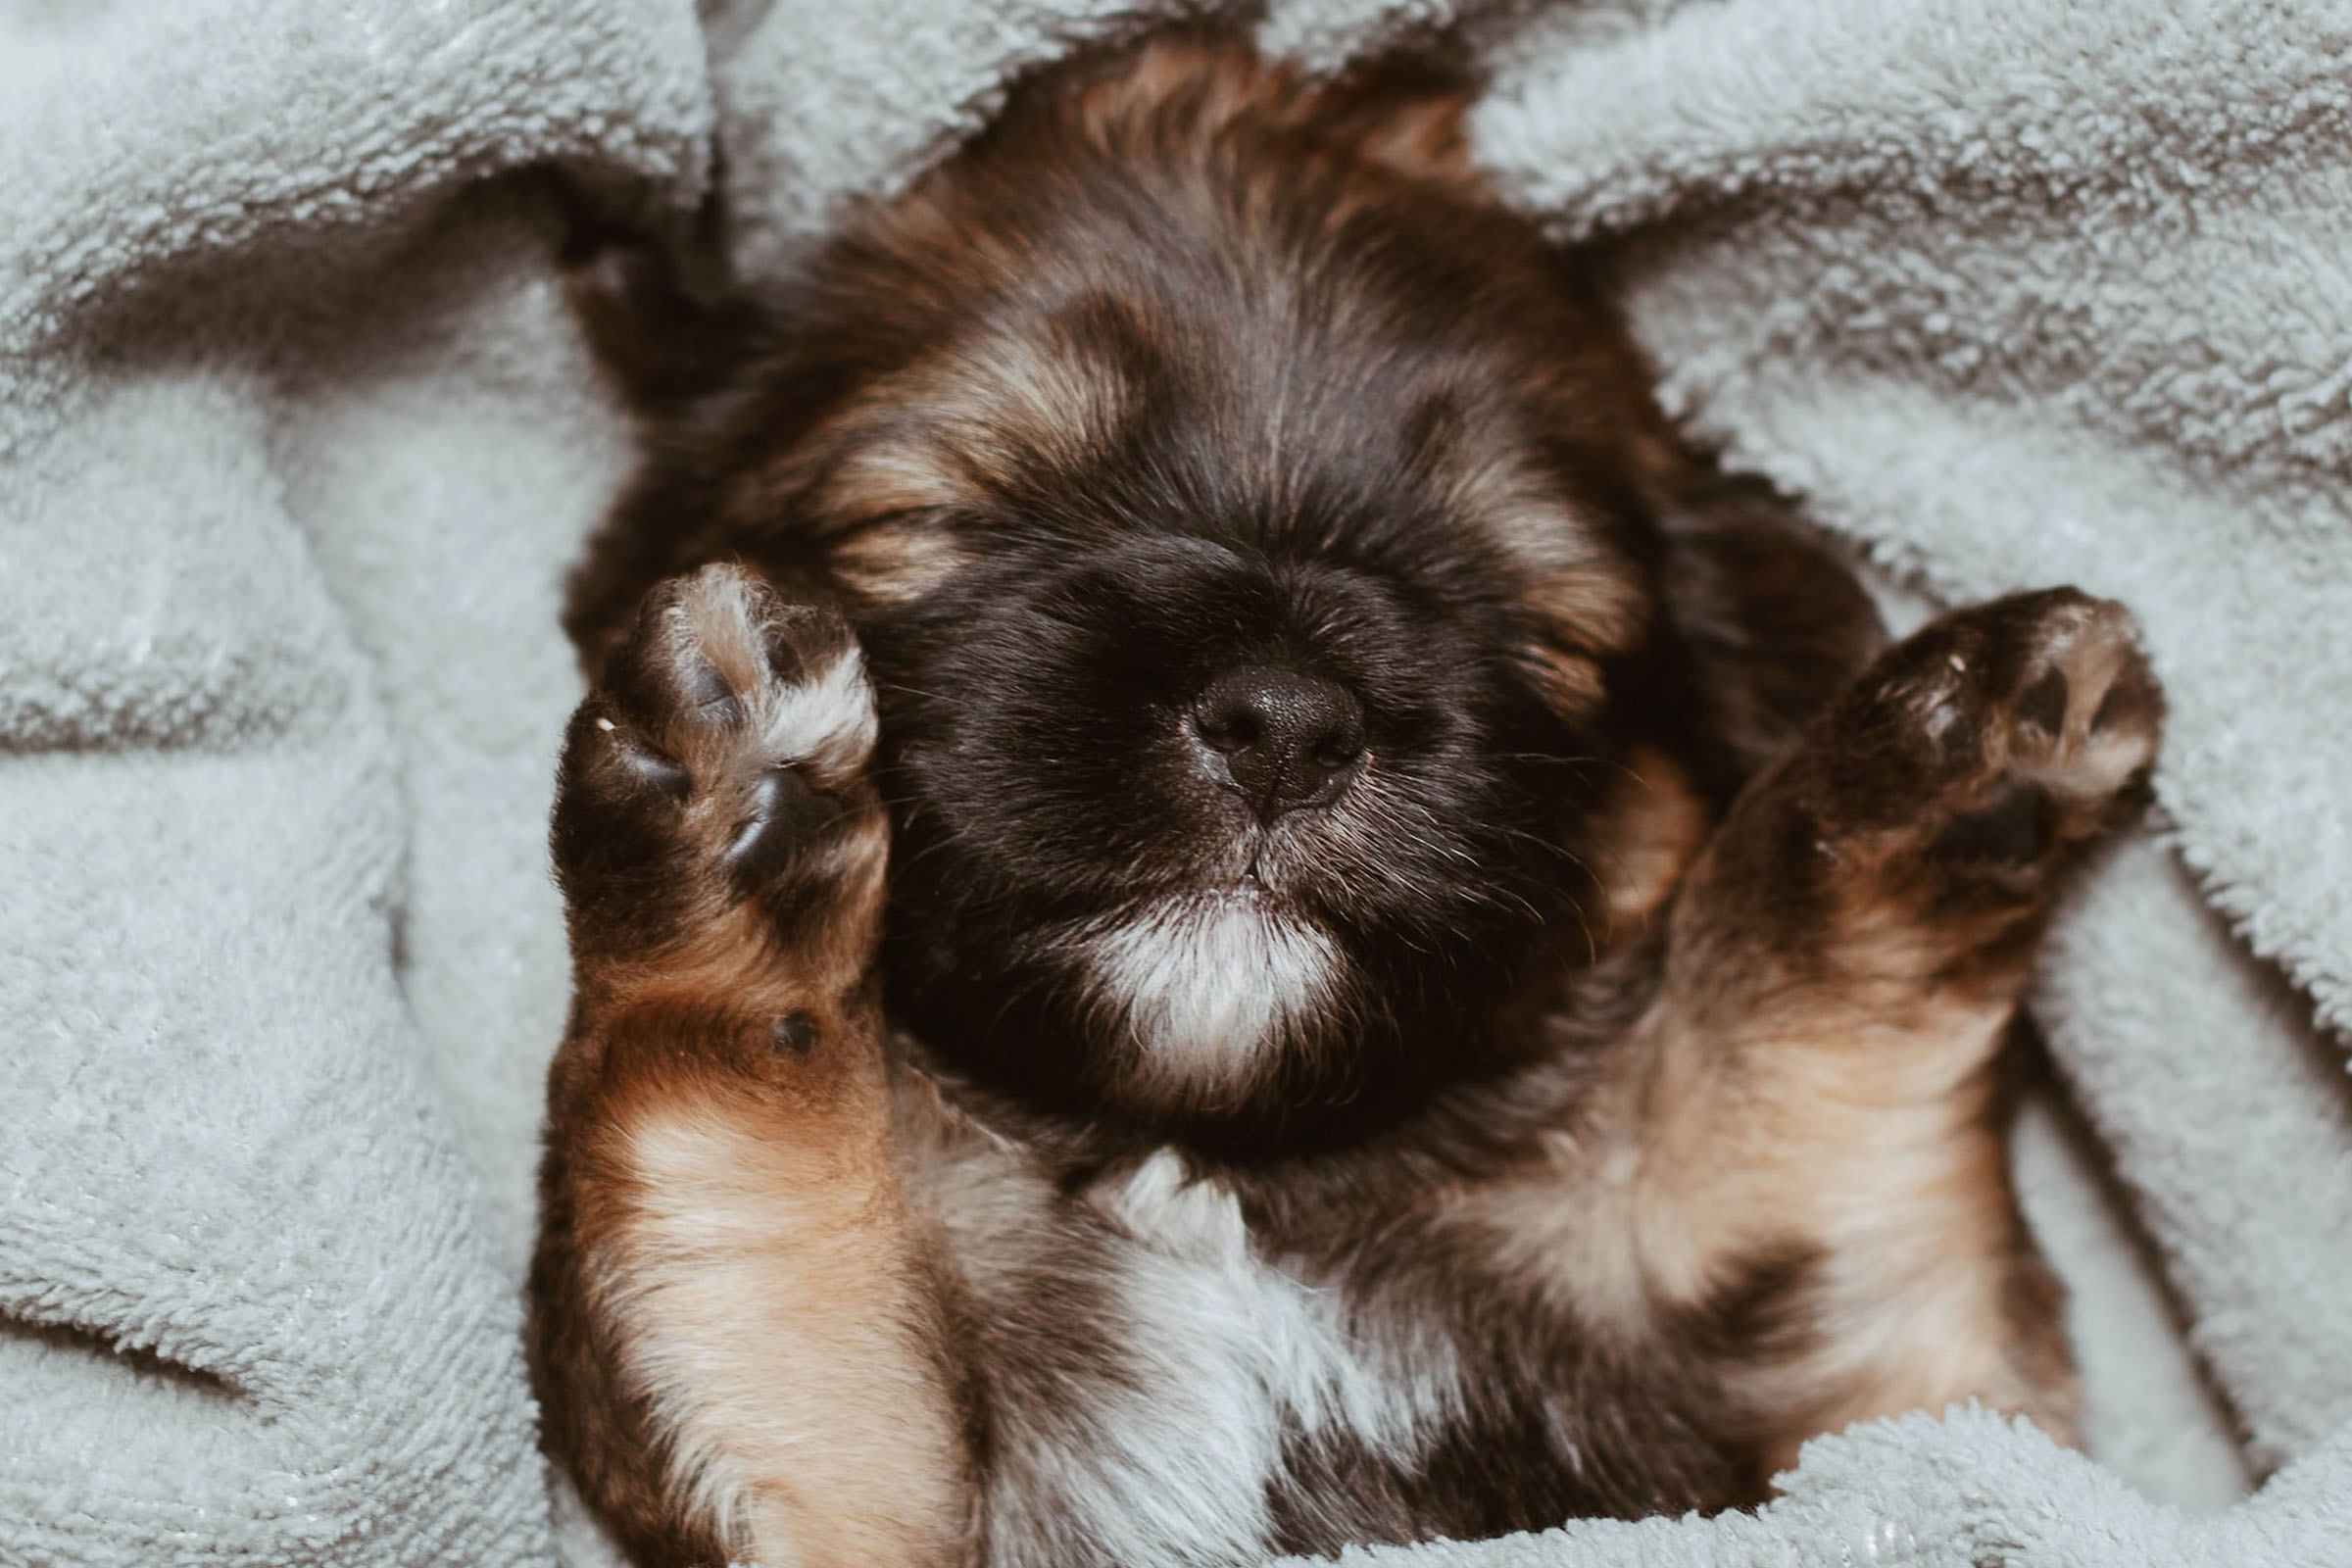 Brown puppy sleeping on a grey blanket